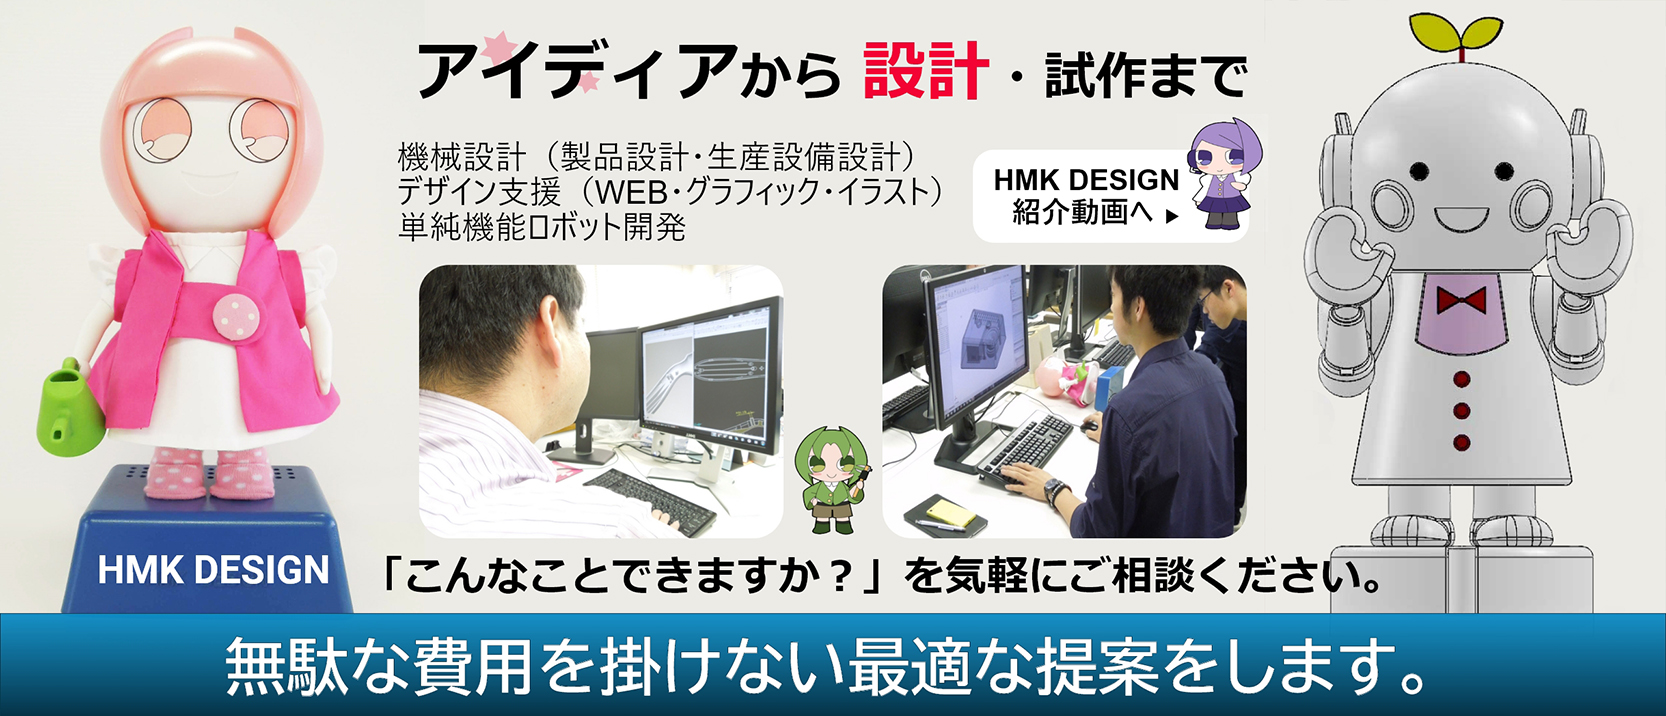 Hmk Design 東北 仙台の機械設計 デザイン会社